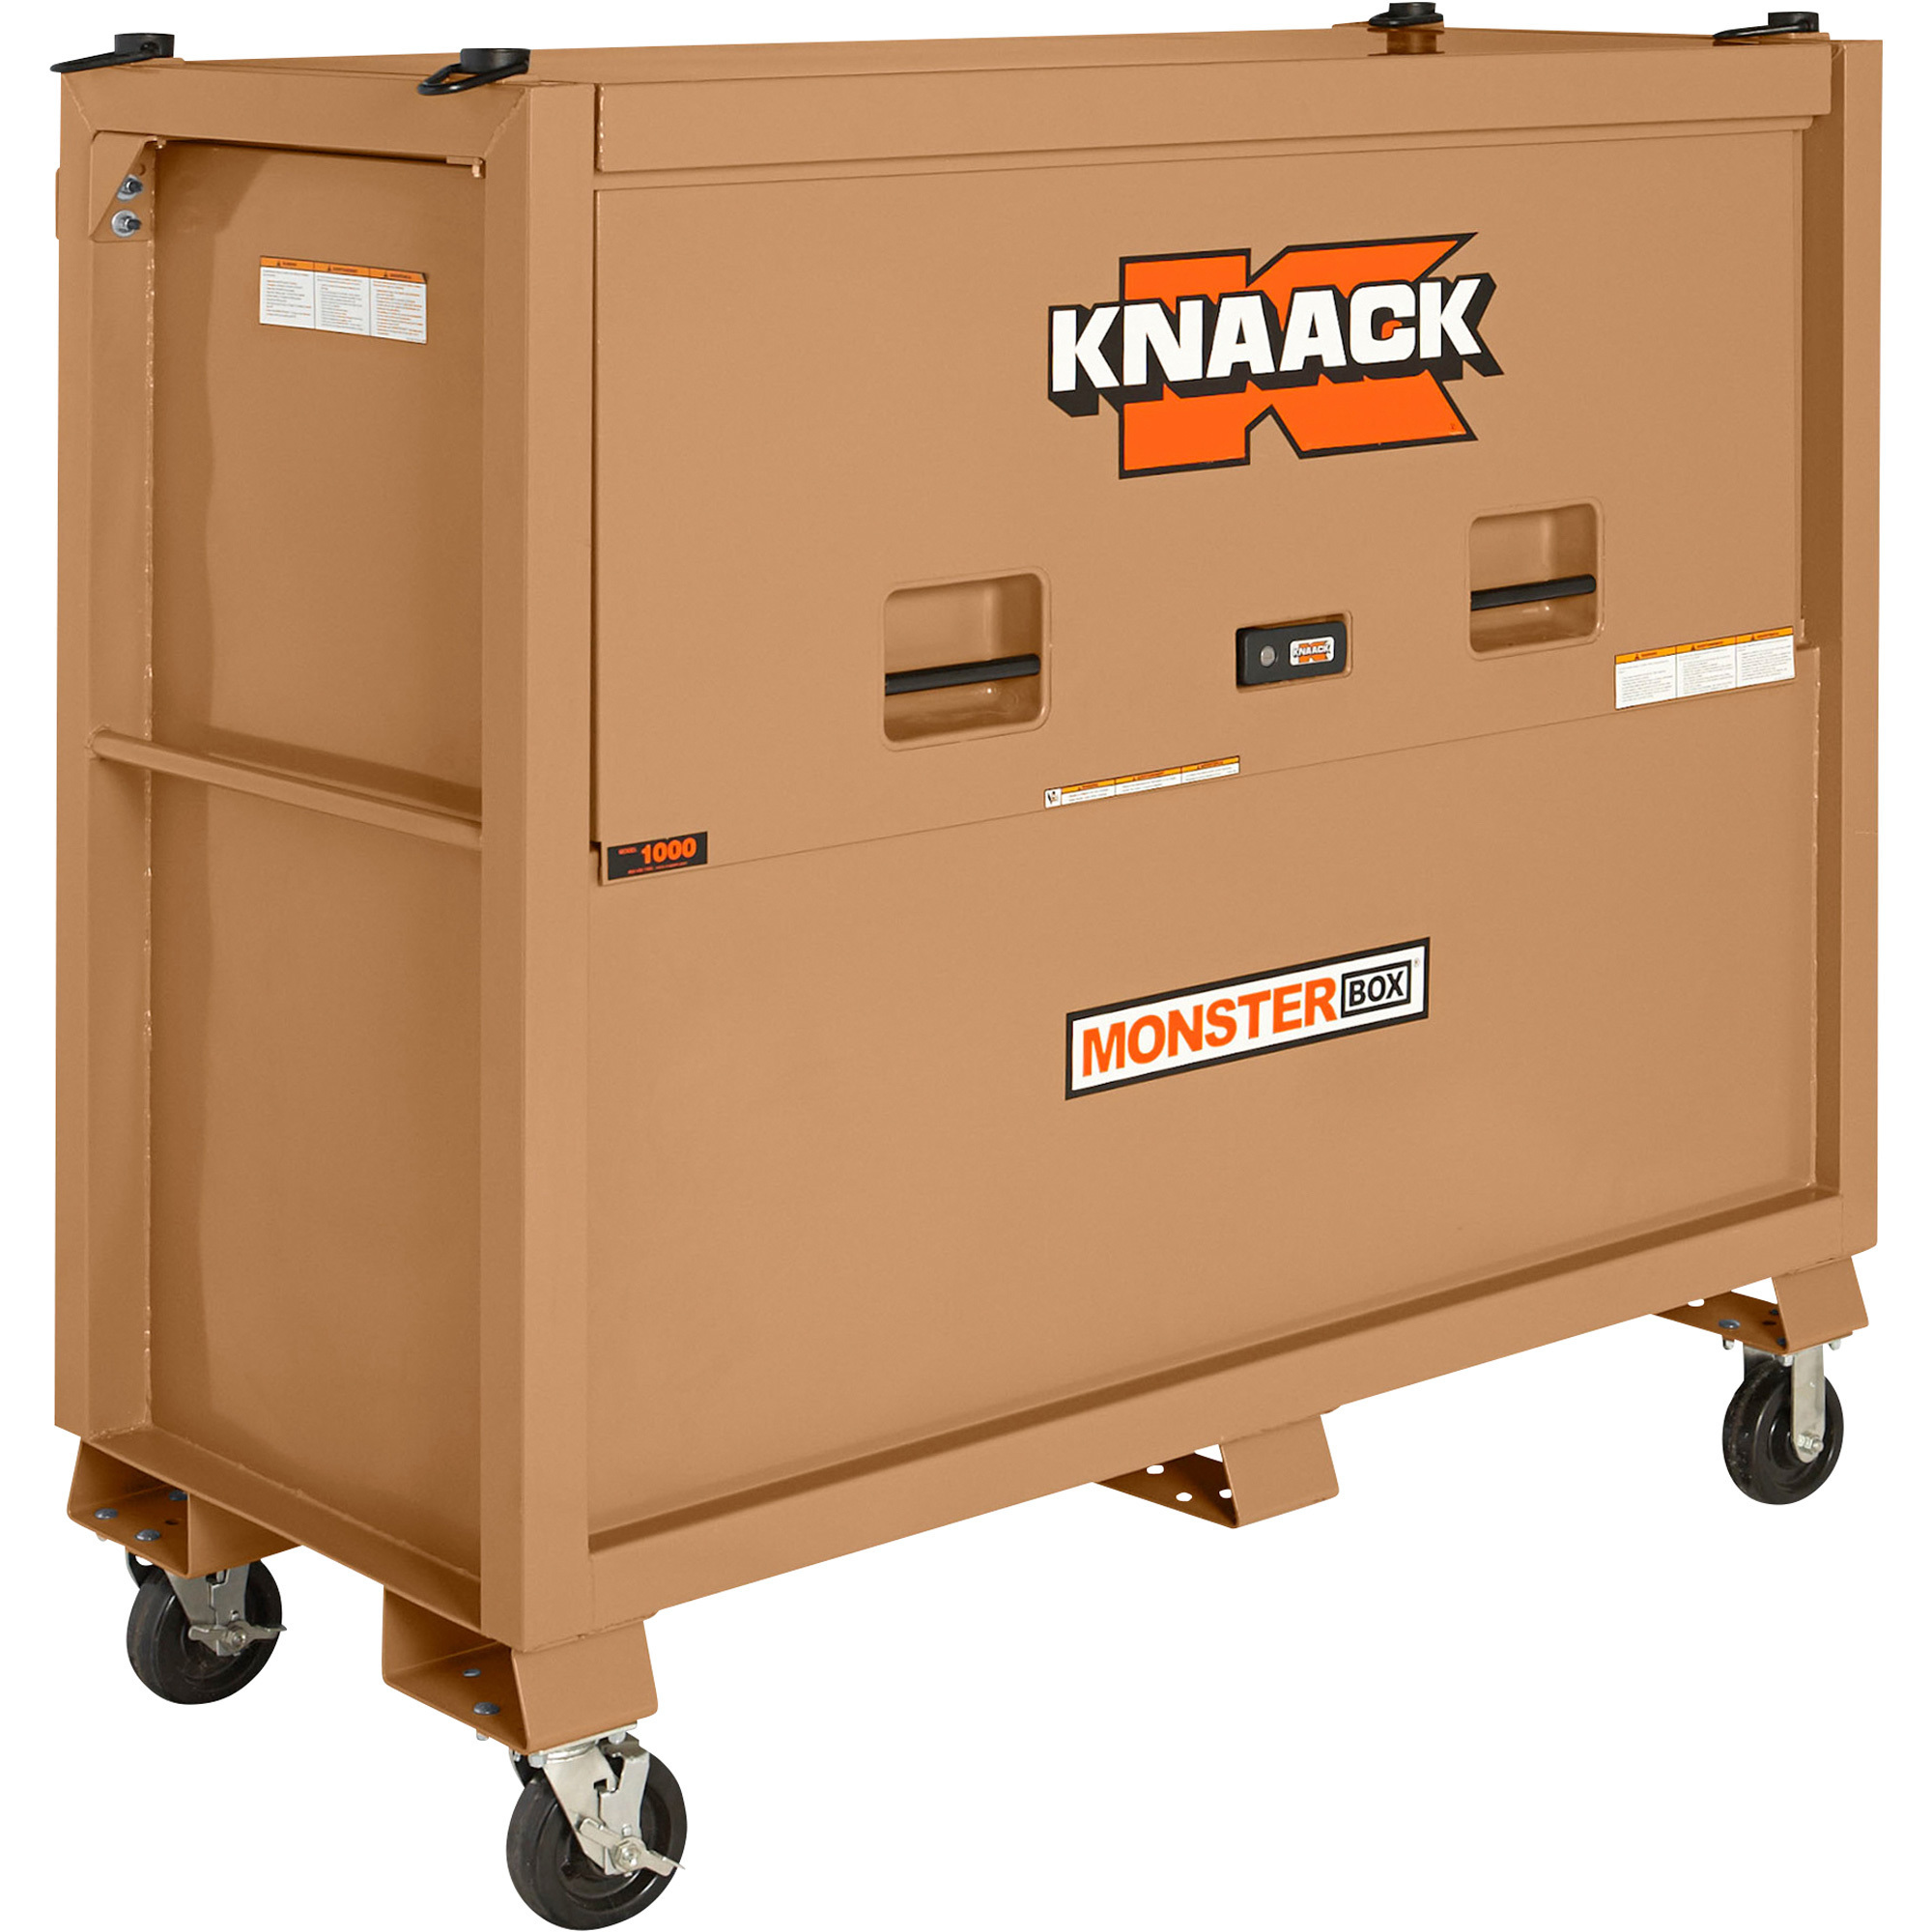 KNAACK Monster Box Piano Box, Tan, 48 Cu. Ft., 66Inch W x 30Inch D x 54 1/2Inch H, Model 1000